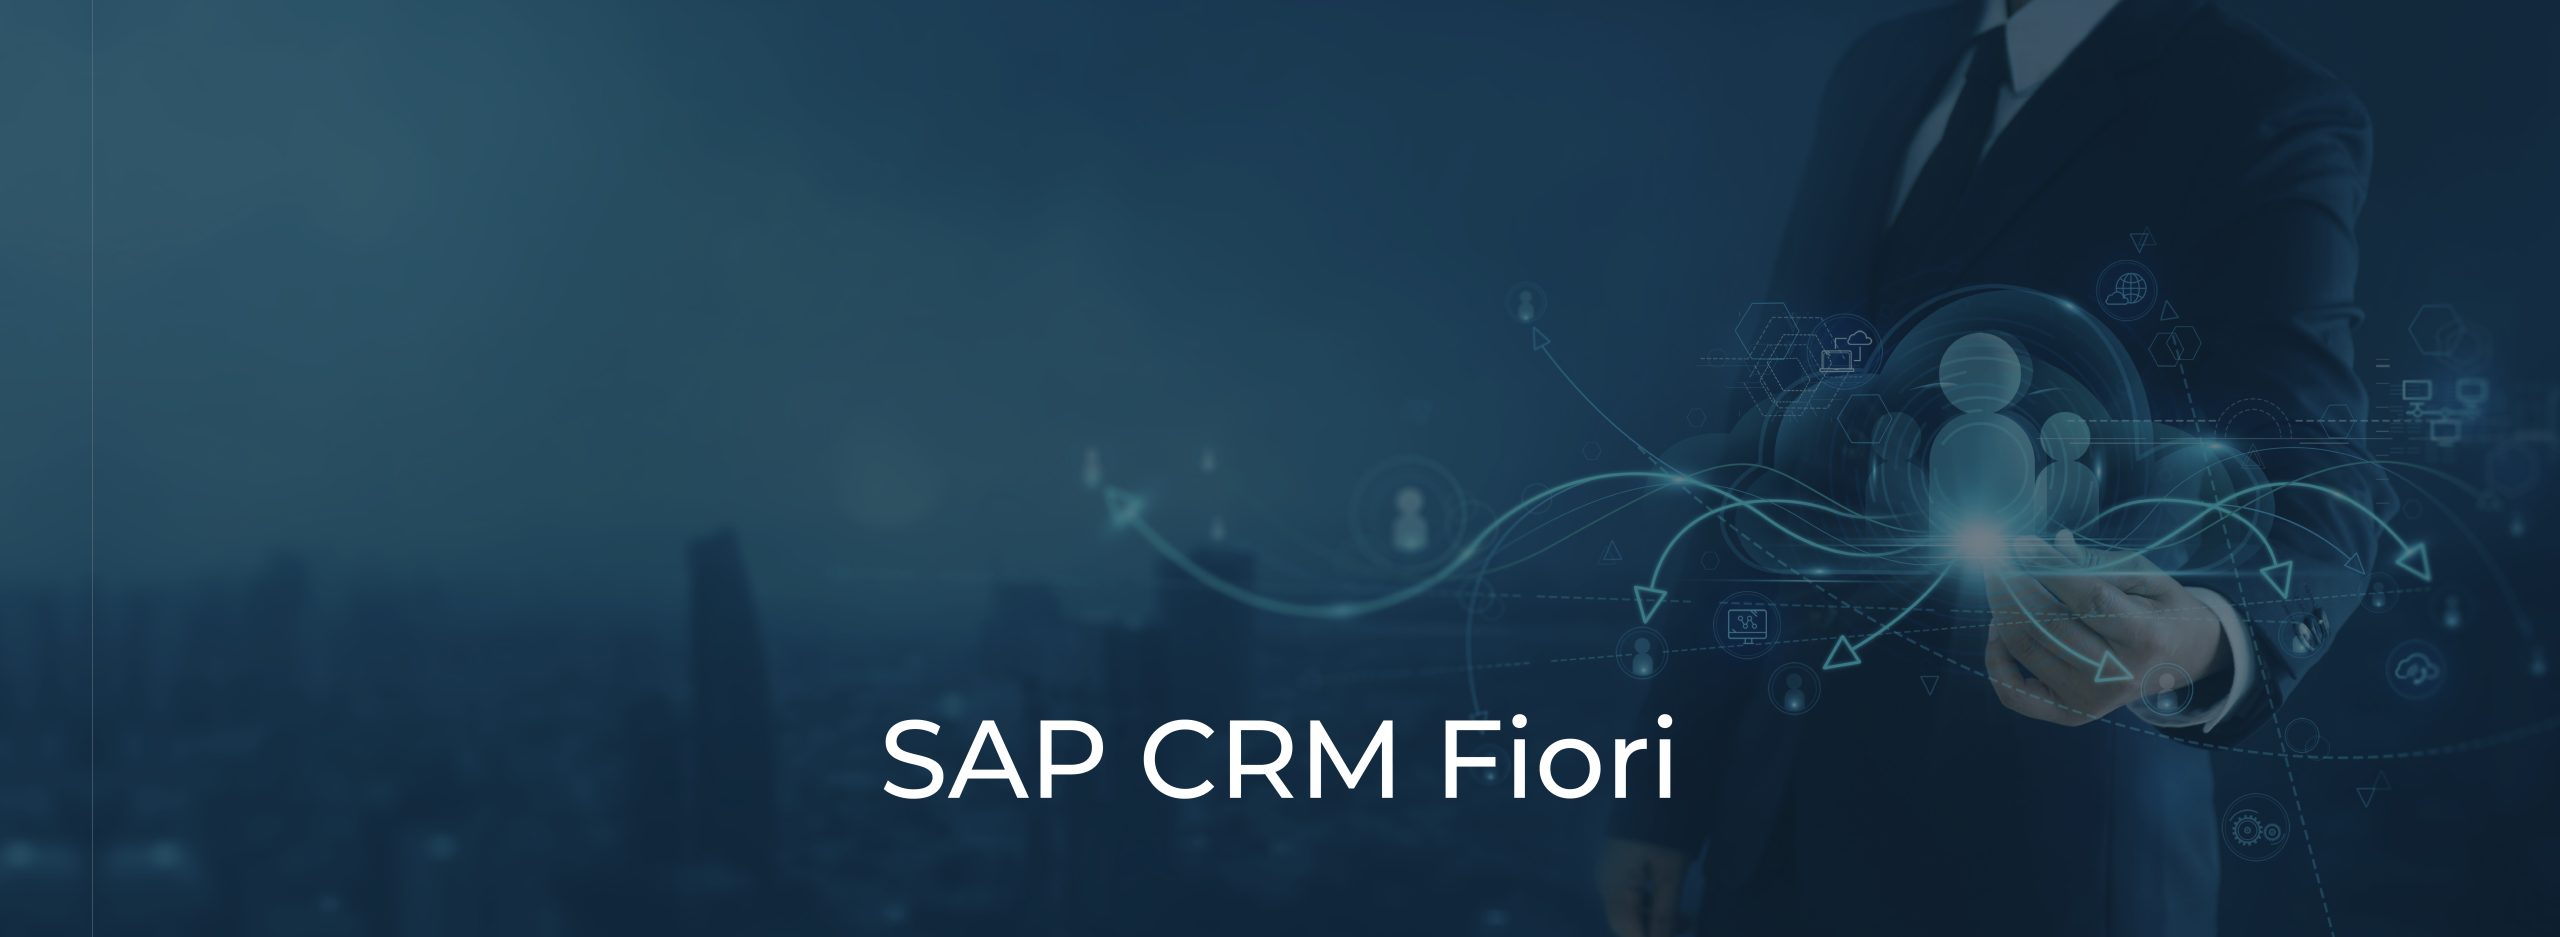 SAP CRM Fiori apps banner